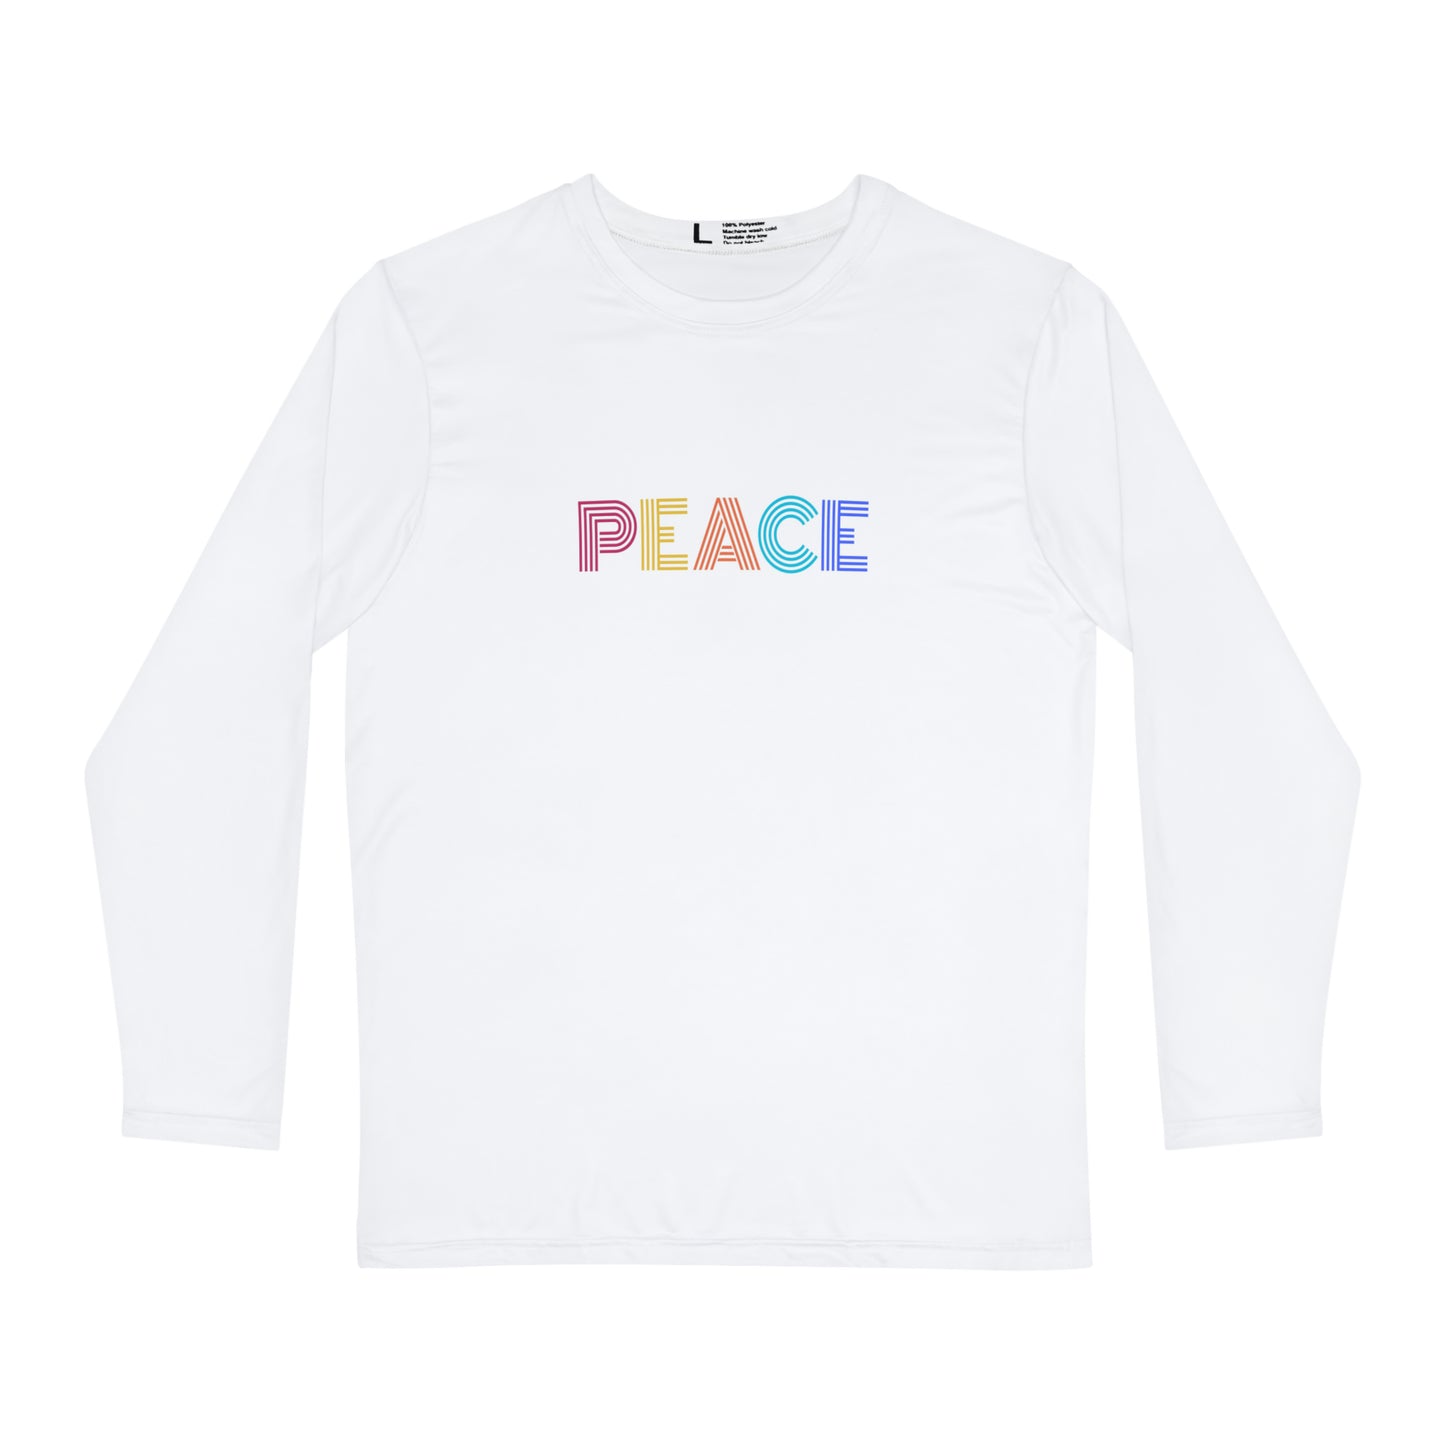 PEACE Men's Long Sleeve Shirt, White